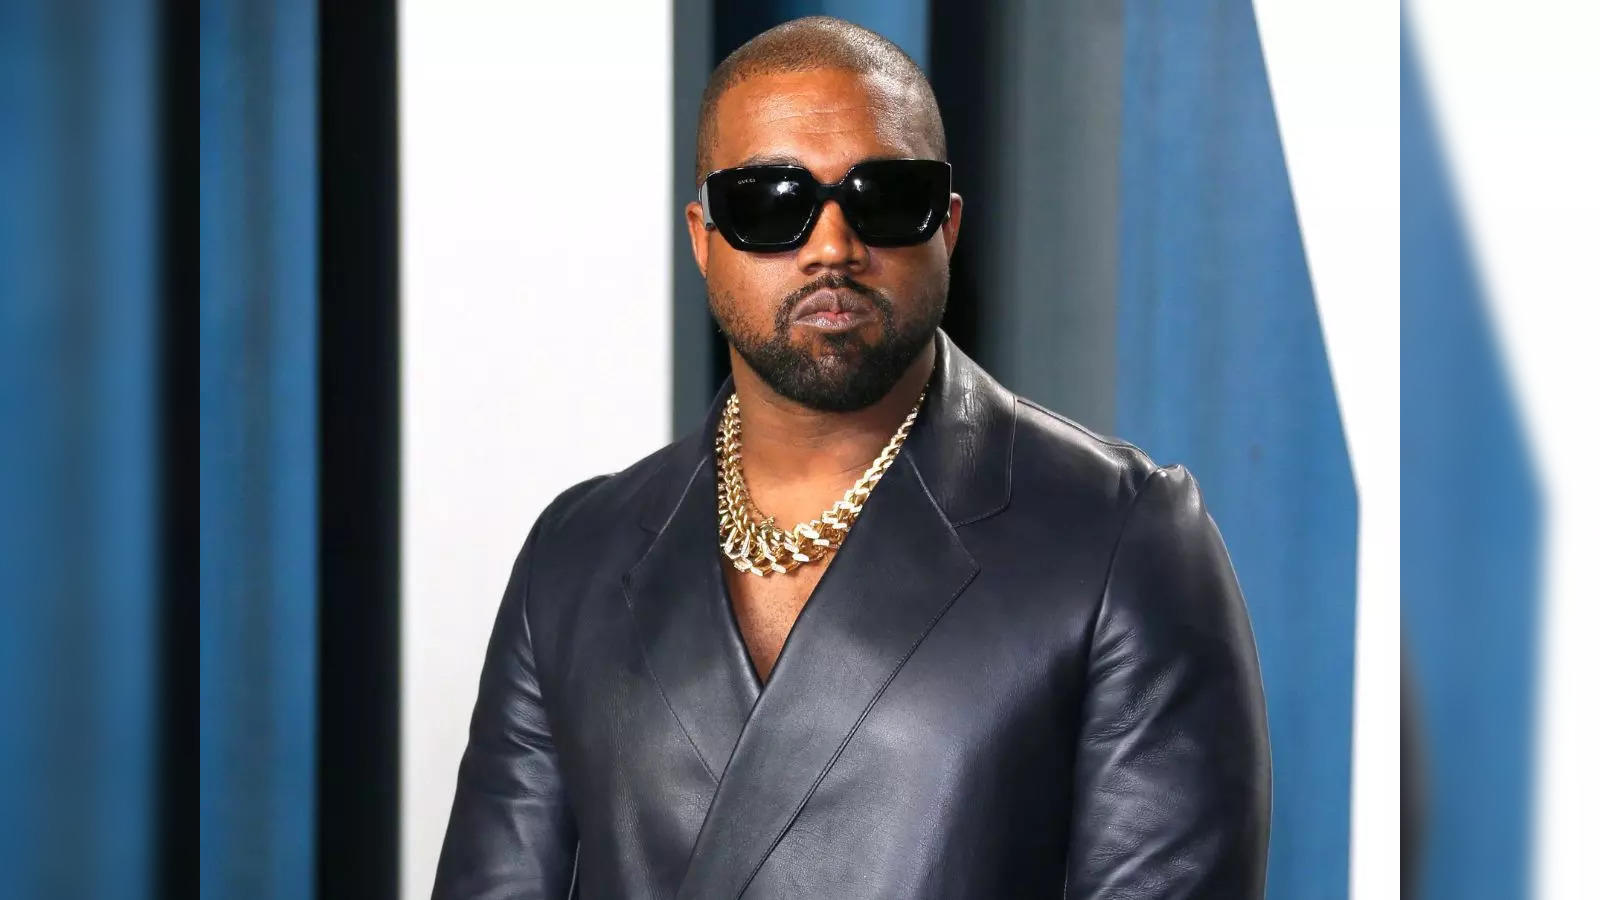 Kanye West Twitter: Kanye West's Twitter exile ends, social media platform  reinstates rapper's official account after 8-month suspension - The  Economic Times